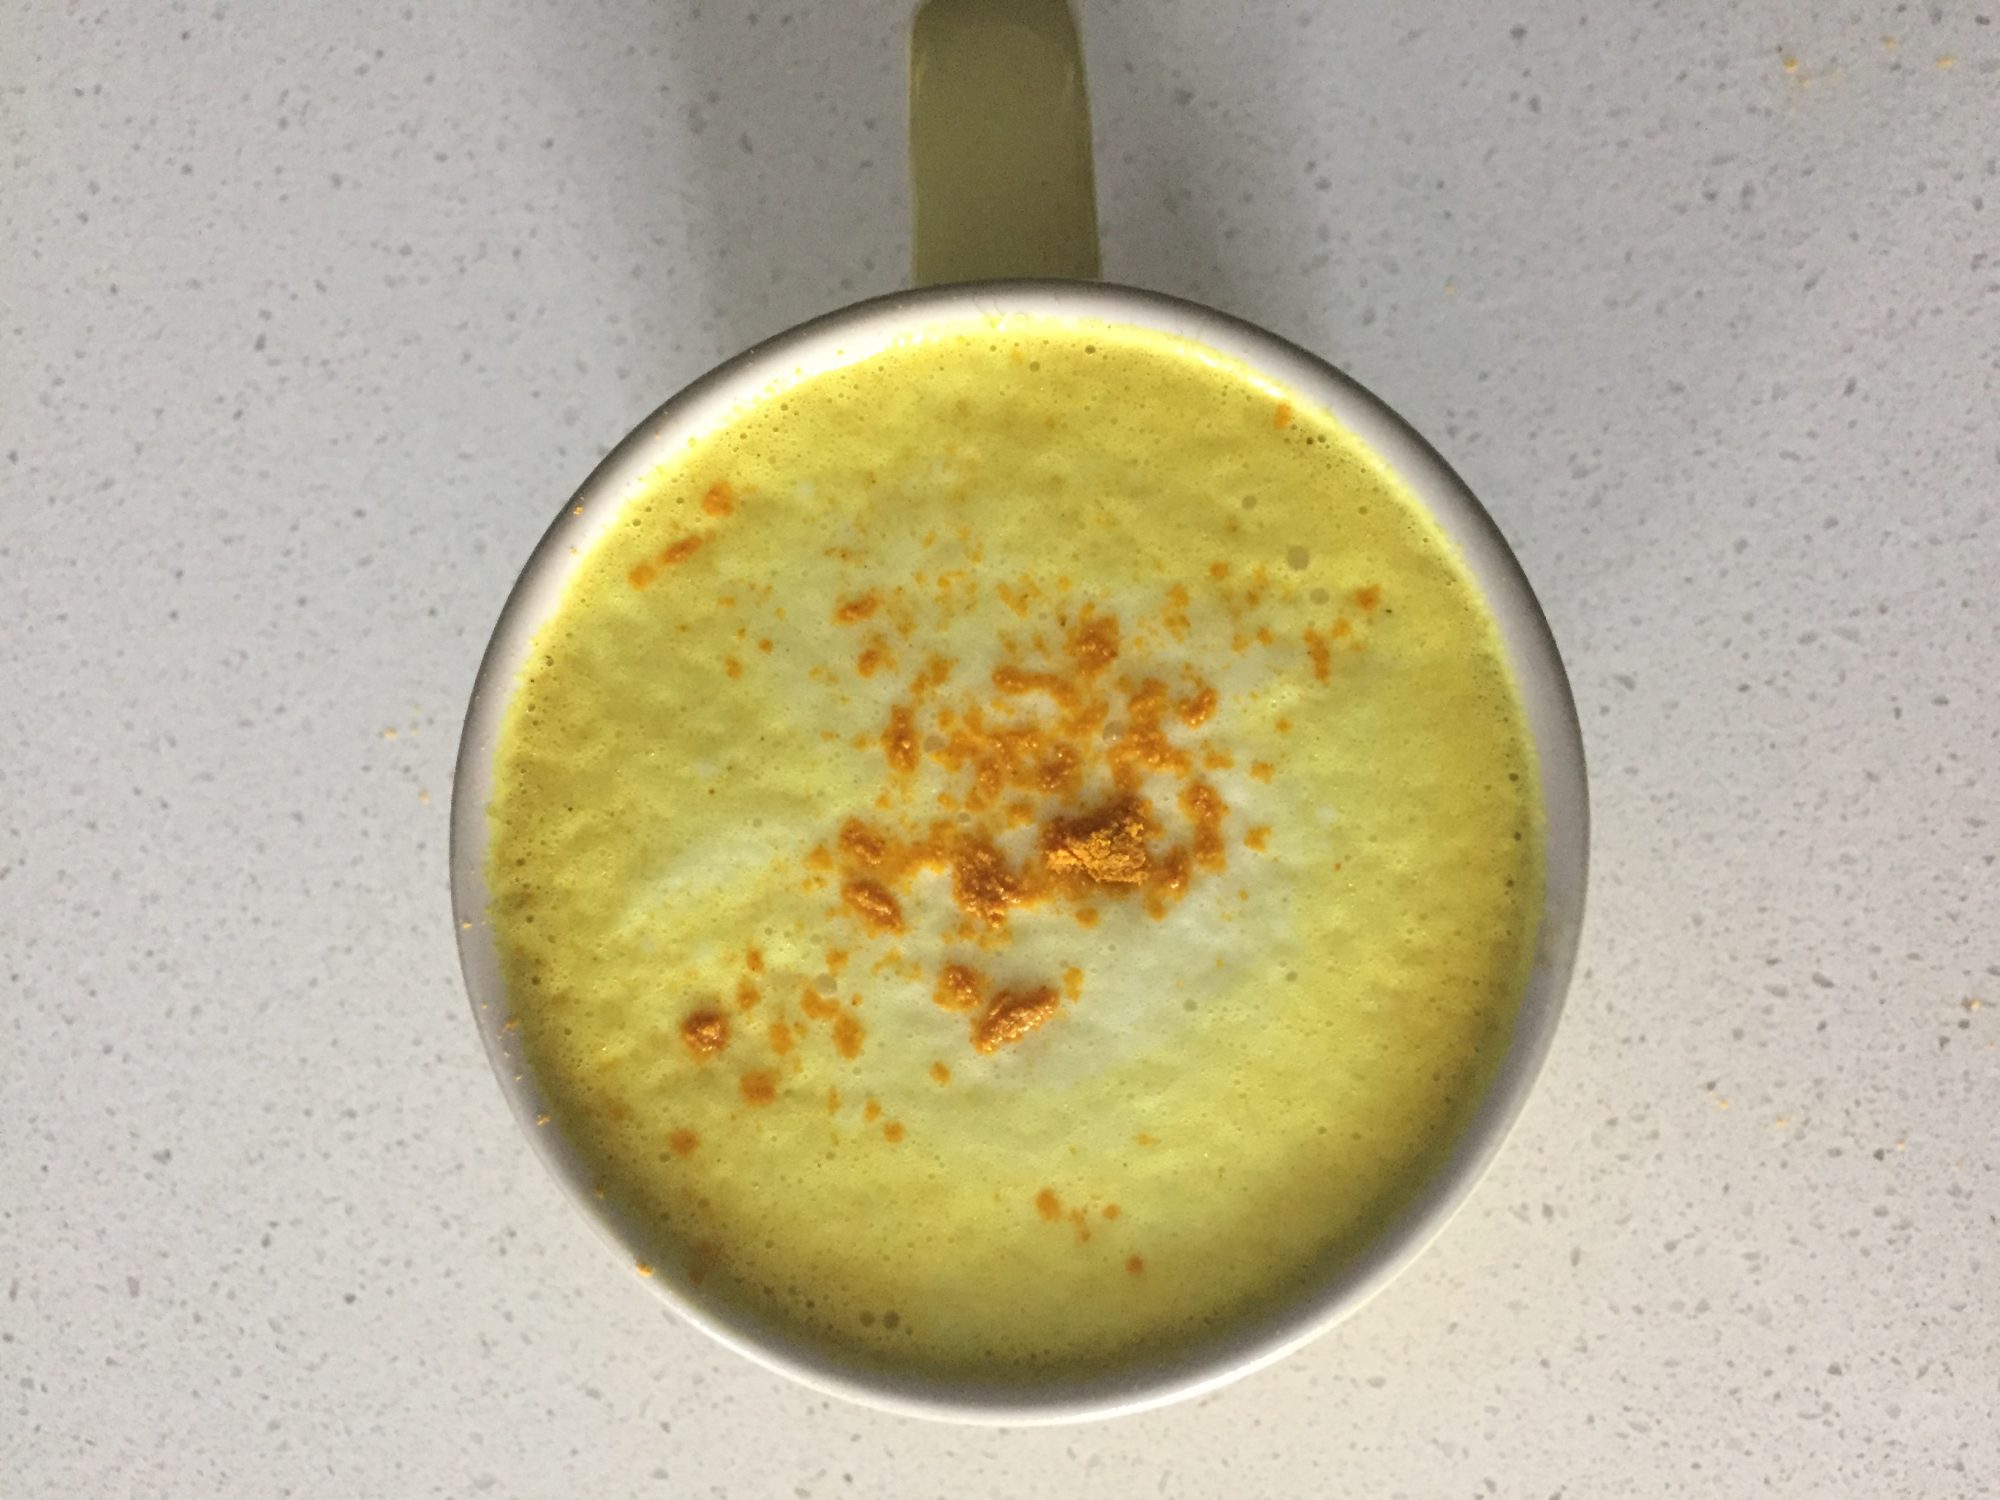 Turmeric Latte Recipe